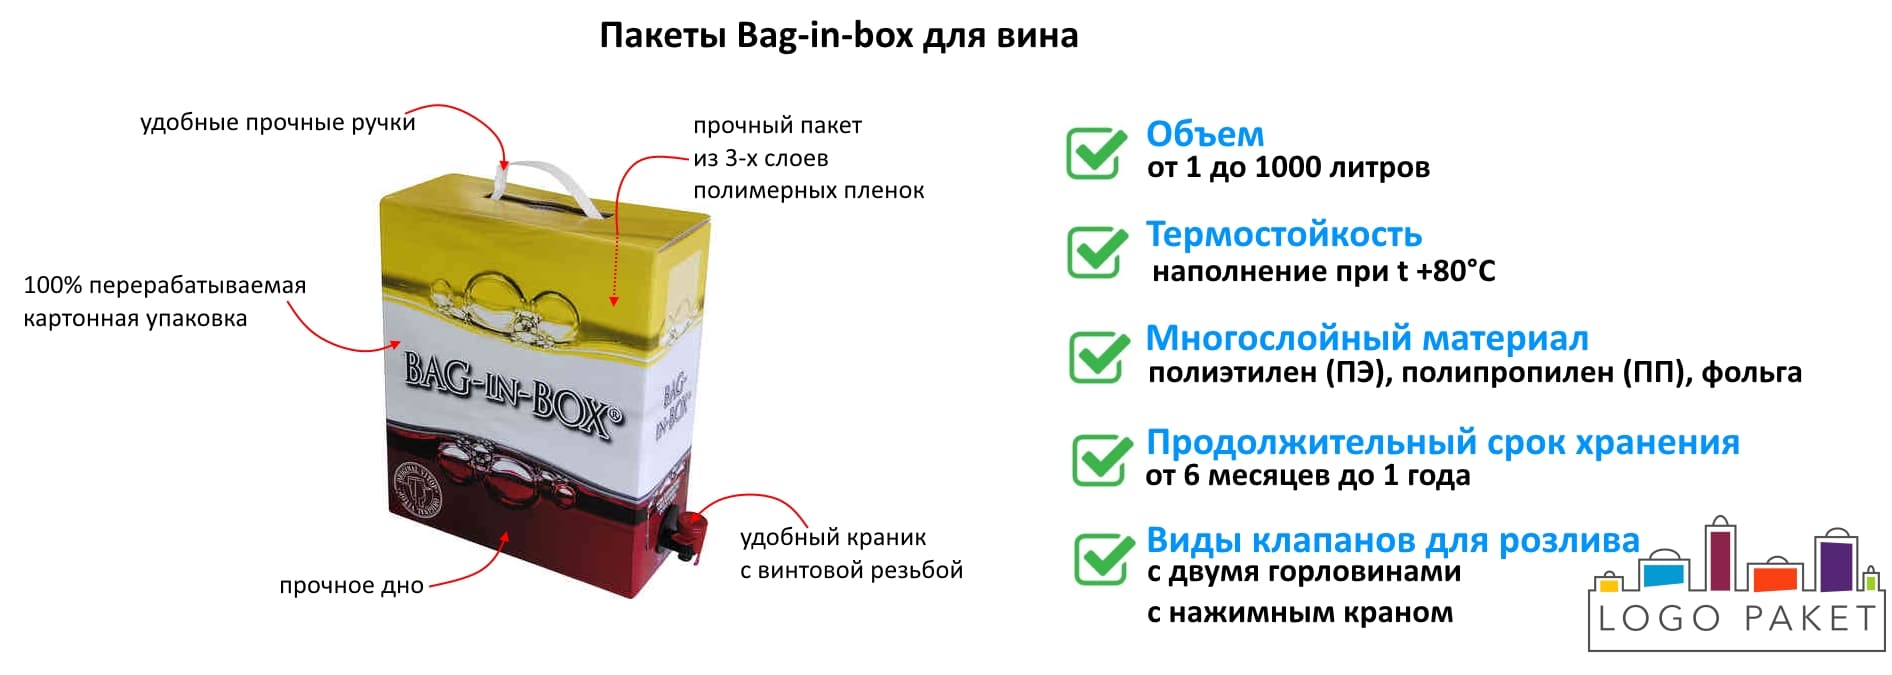 Пакеты Bag-in-box для вина инфографика 